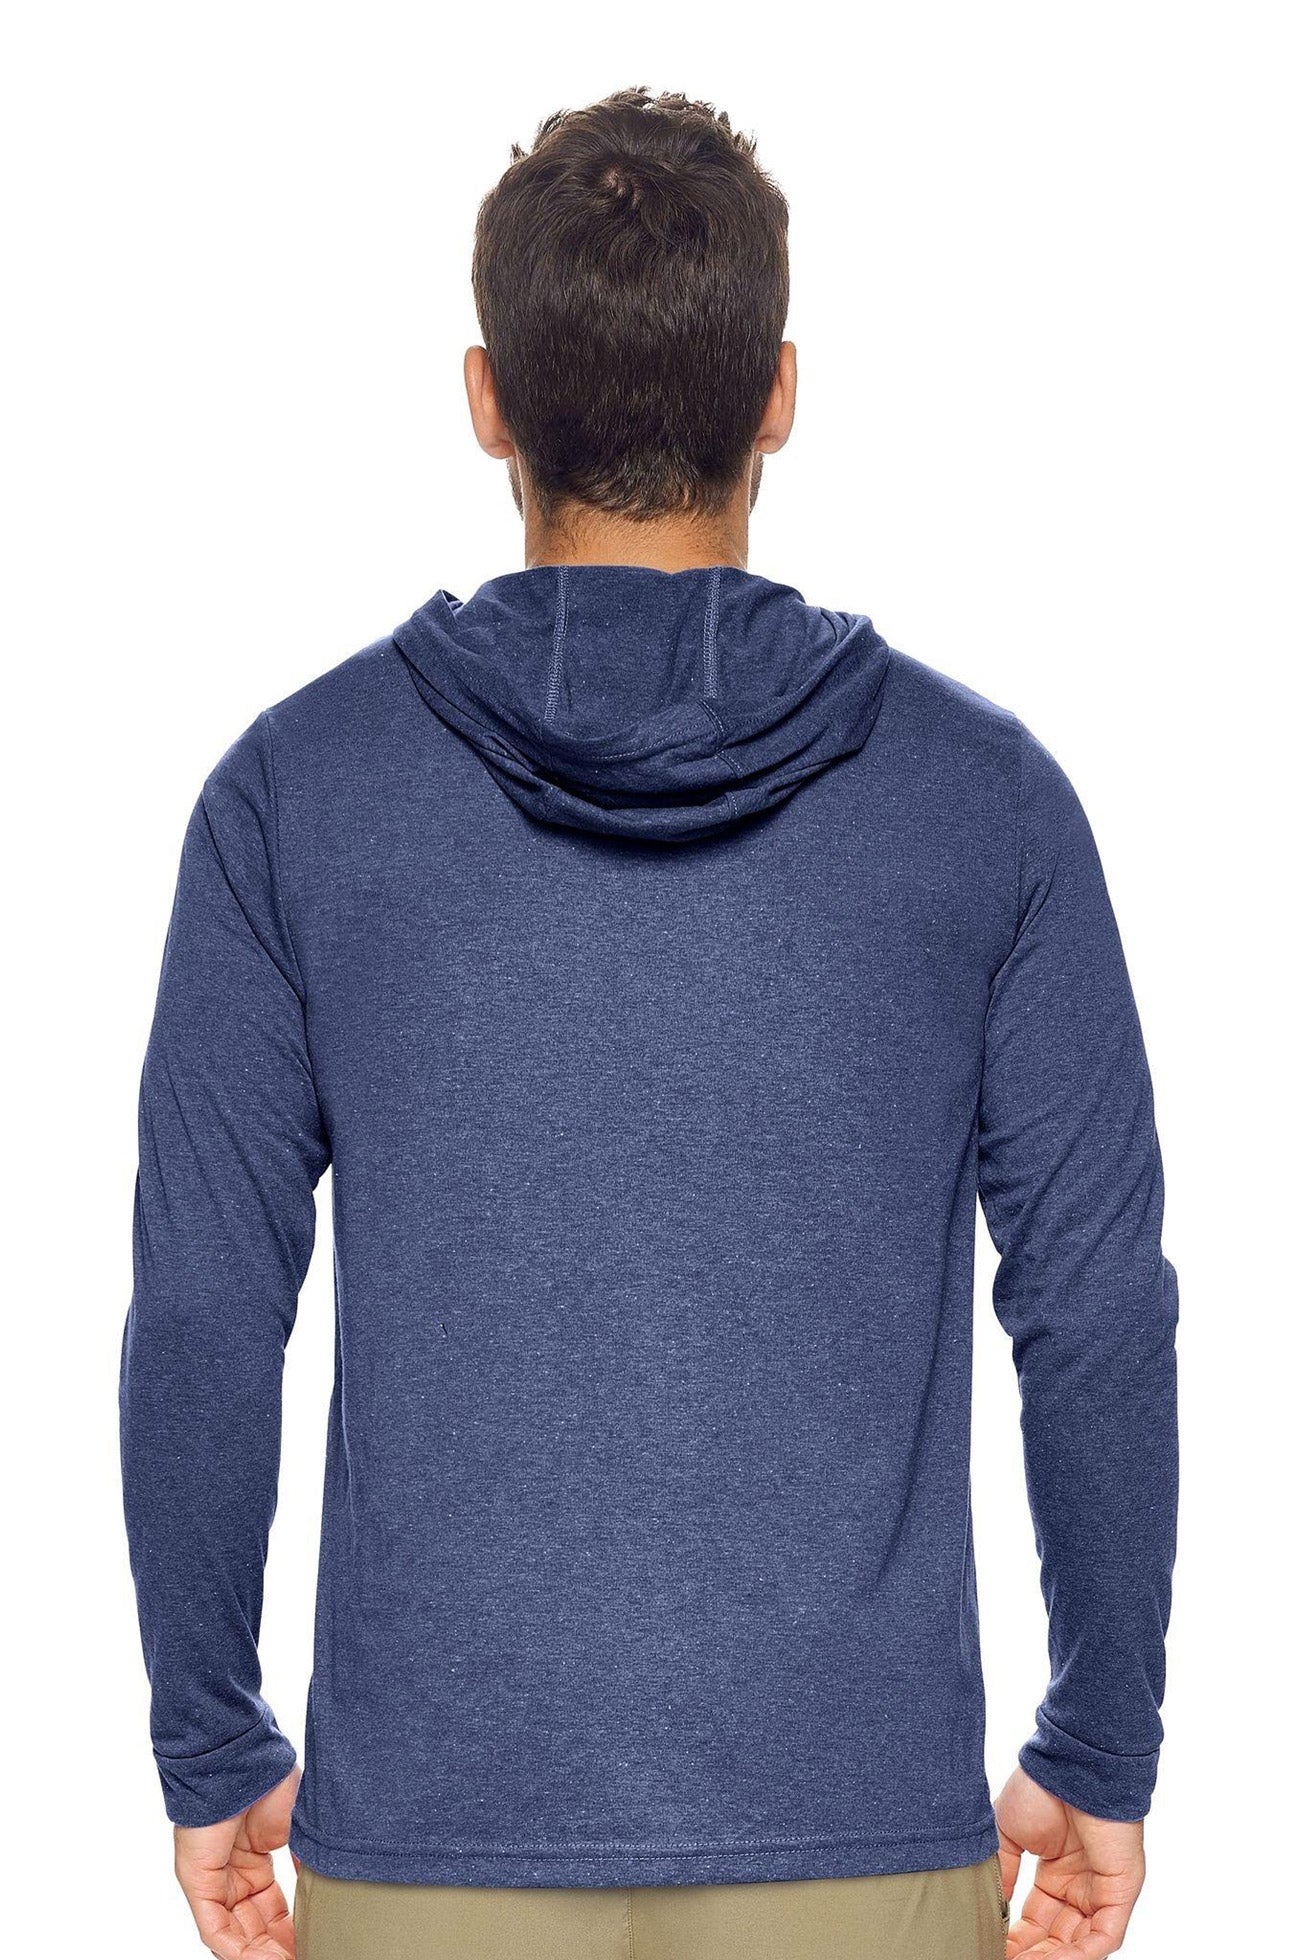 Expert Apparel Men's Hoodie Shirt Performance Dark Heather Navy Made in USA Image 3#color_dark-heather-navy